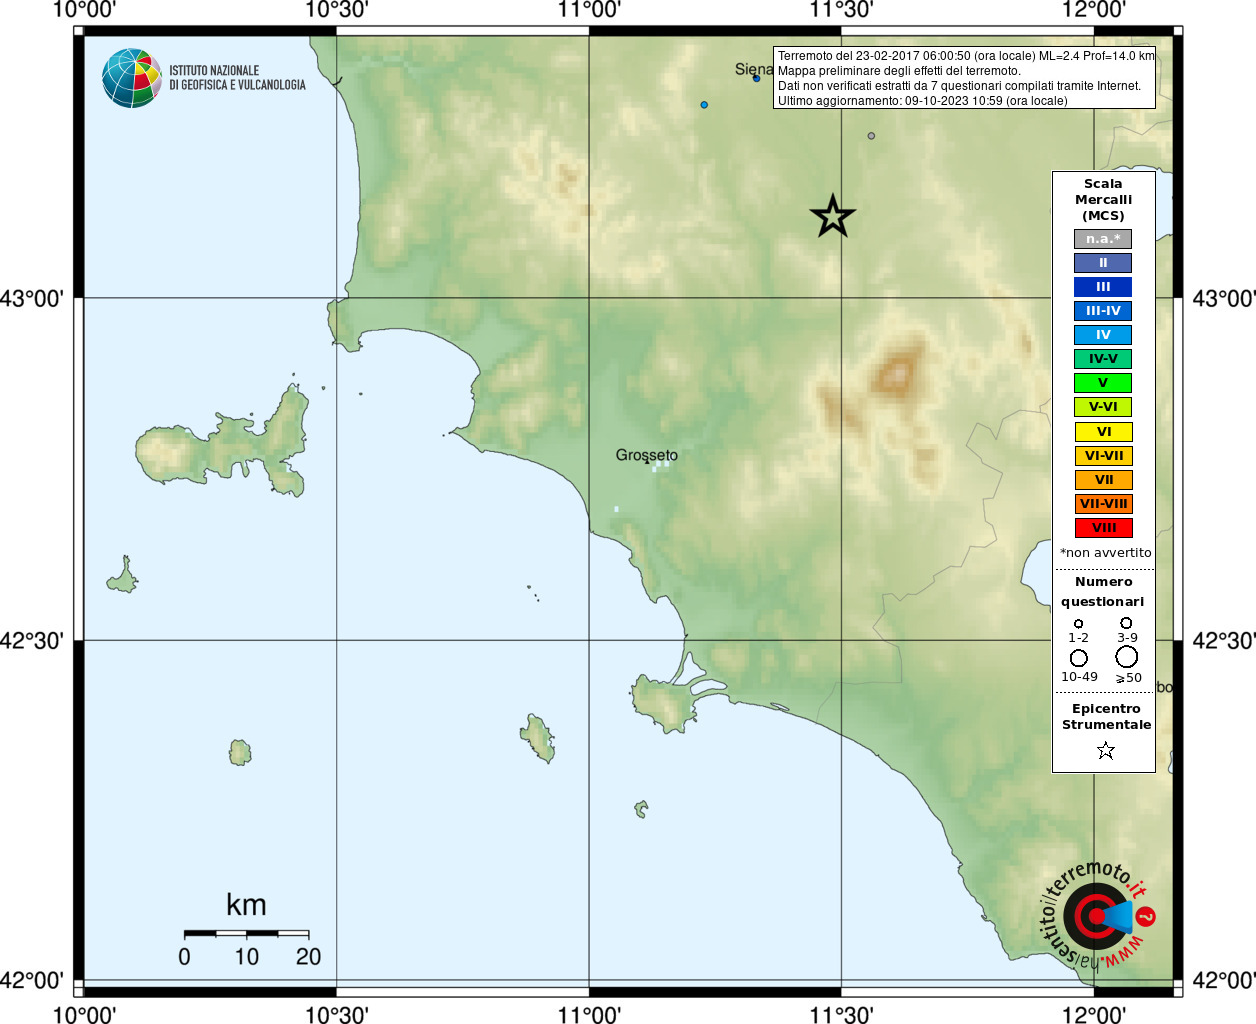 Earthquake 2 km S Buonconvento (SI), Magnitude ML 2.4, 23 February 2017 time 06:00:50 ...